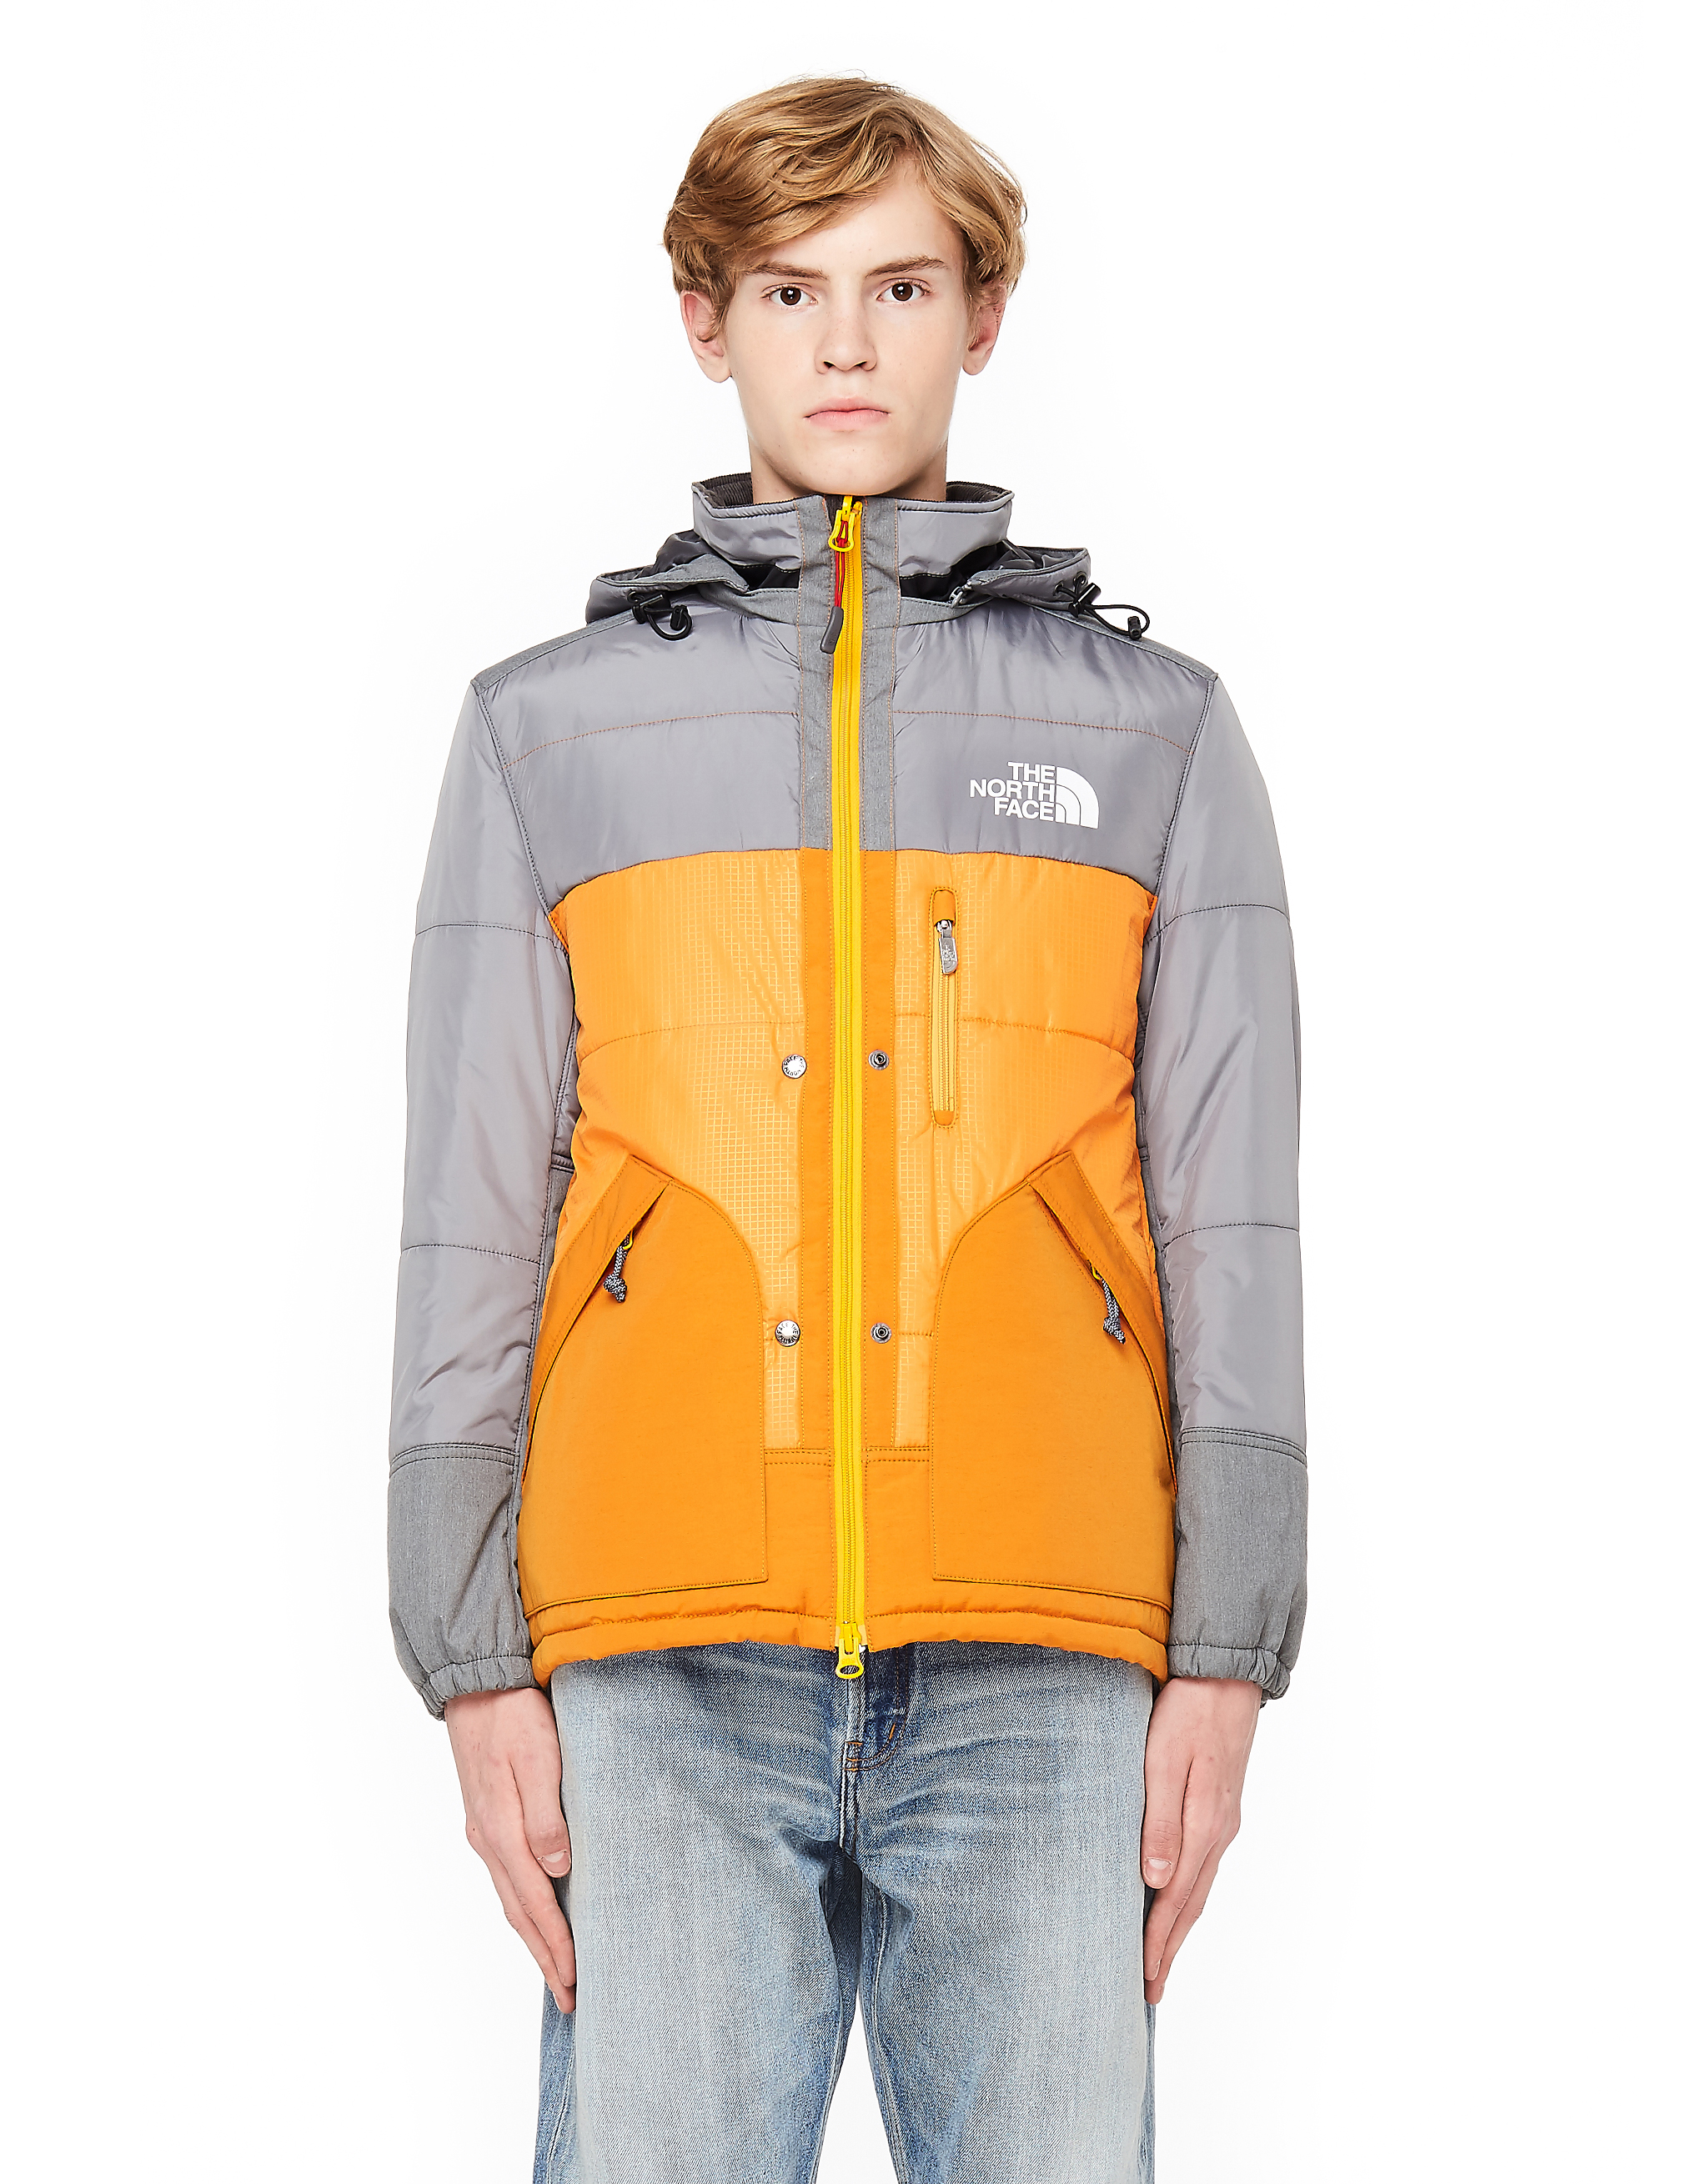 The North Face Grey \u0026 Orange Jacket by 